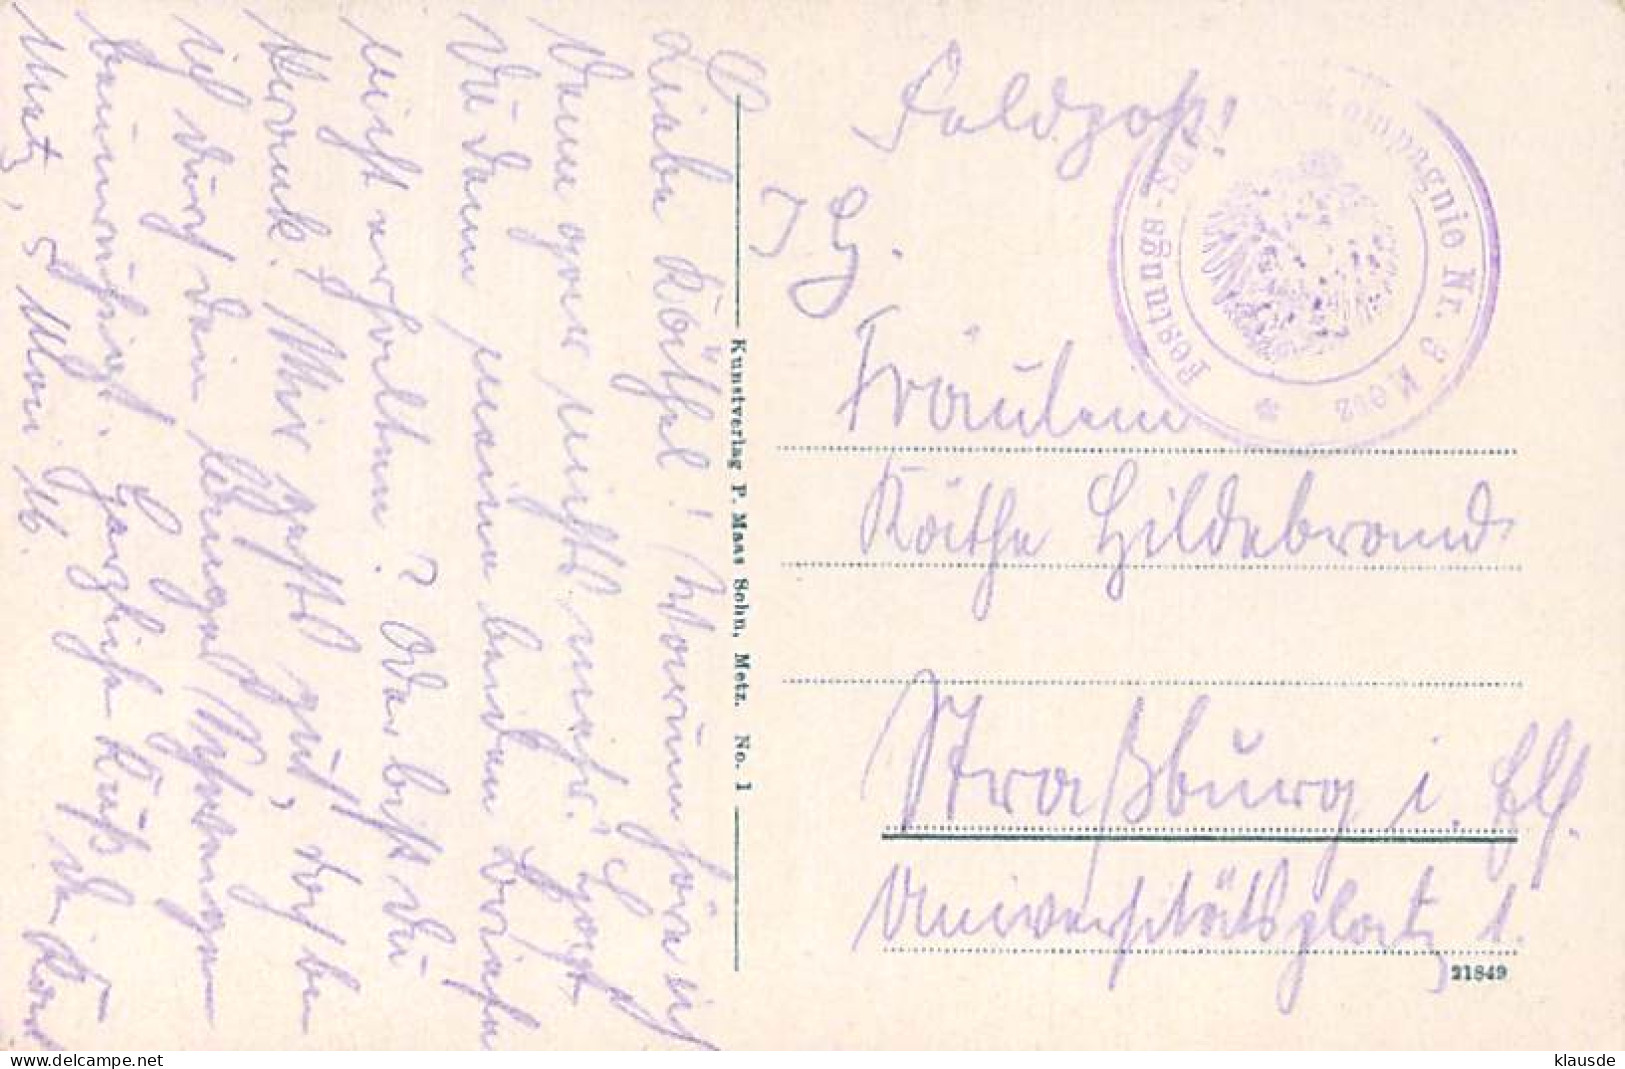 Metz - Kaiser Wilhelm-Ring Mitz Camouffelturm Feldpost 1915 - Lothringen